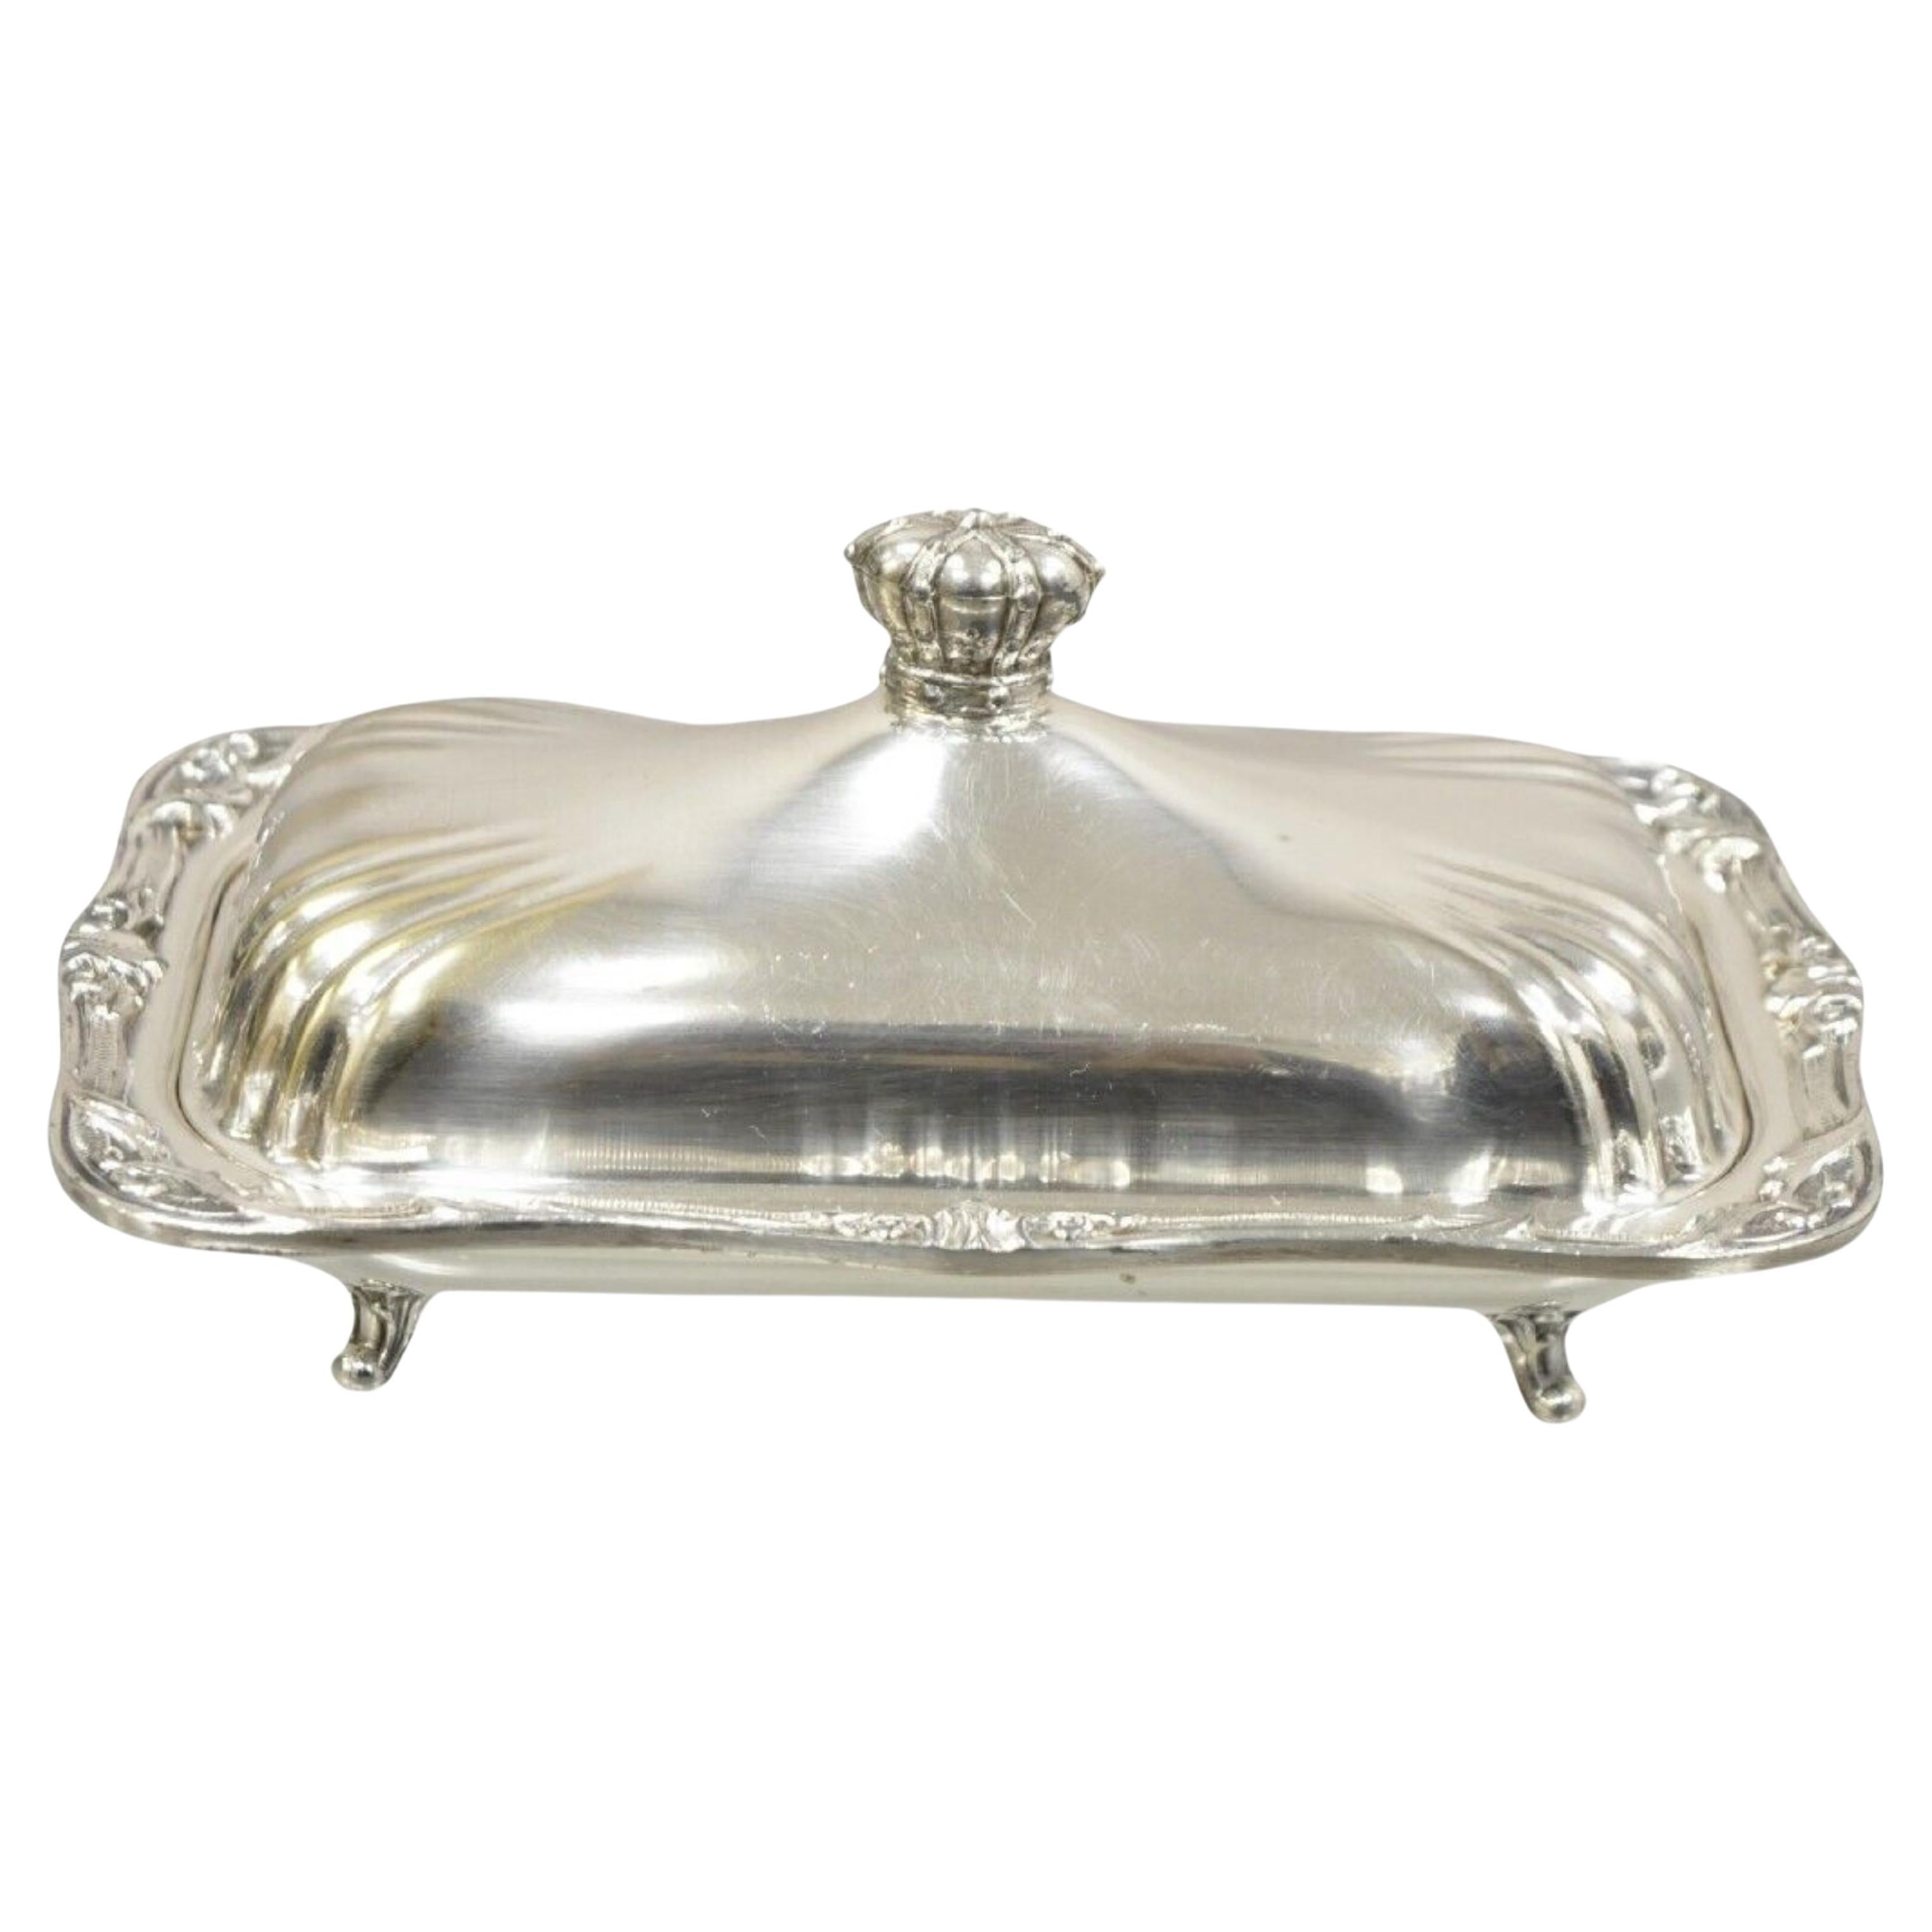 Vintage Coronet Silver Victorian Silver Plated Covered Butter Dish Crown Handle (Coronet victorien en argent plaqué)